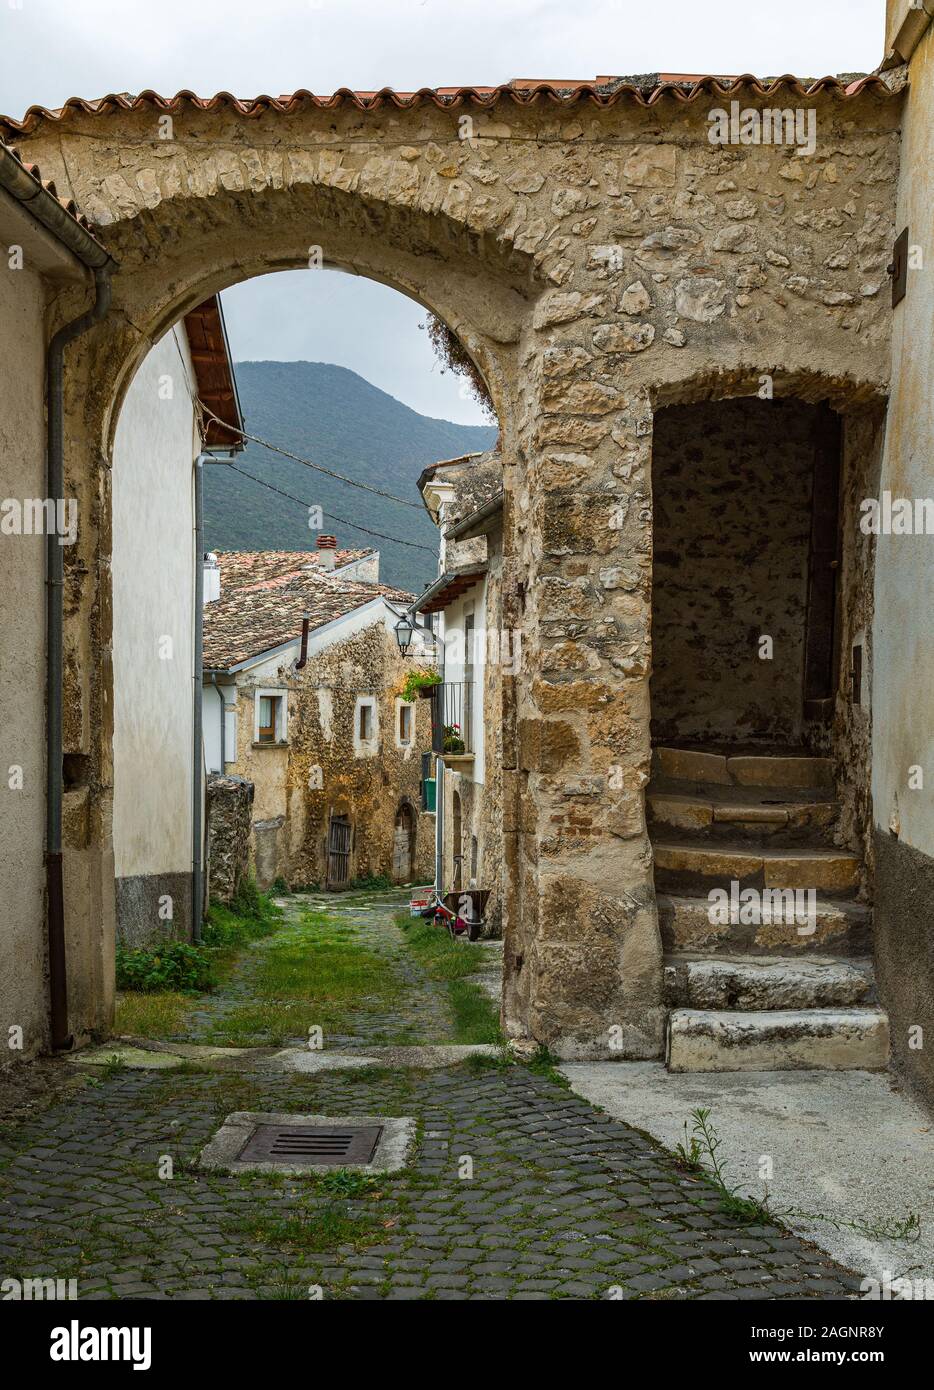 Medieval village, Goriano Valli, L'Aquila Stock Photo